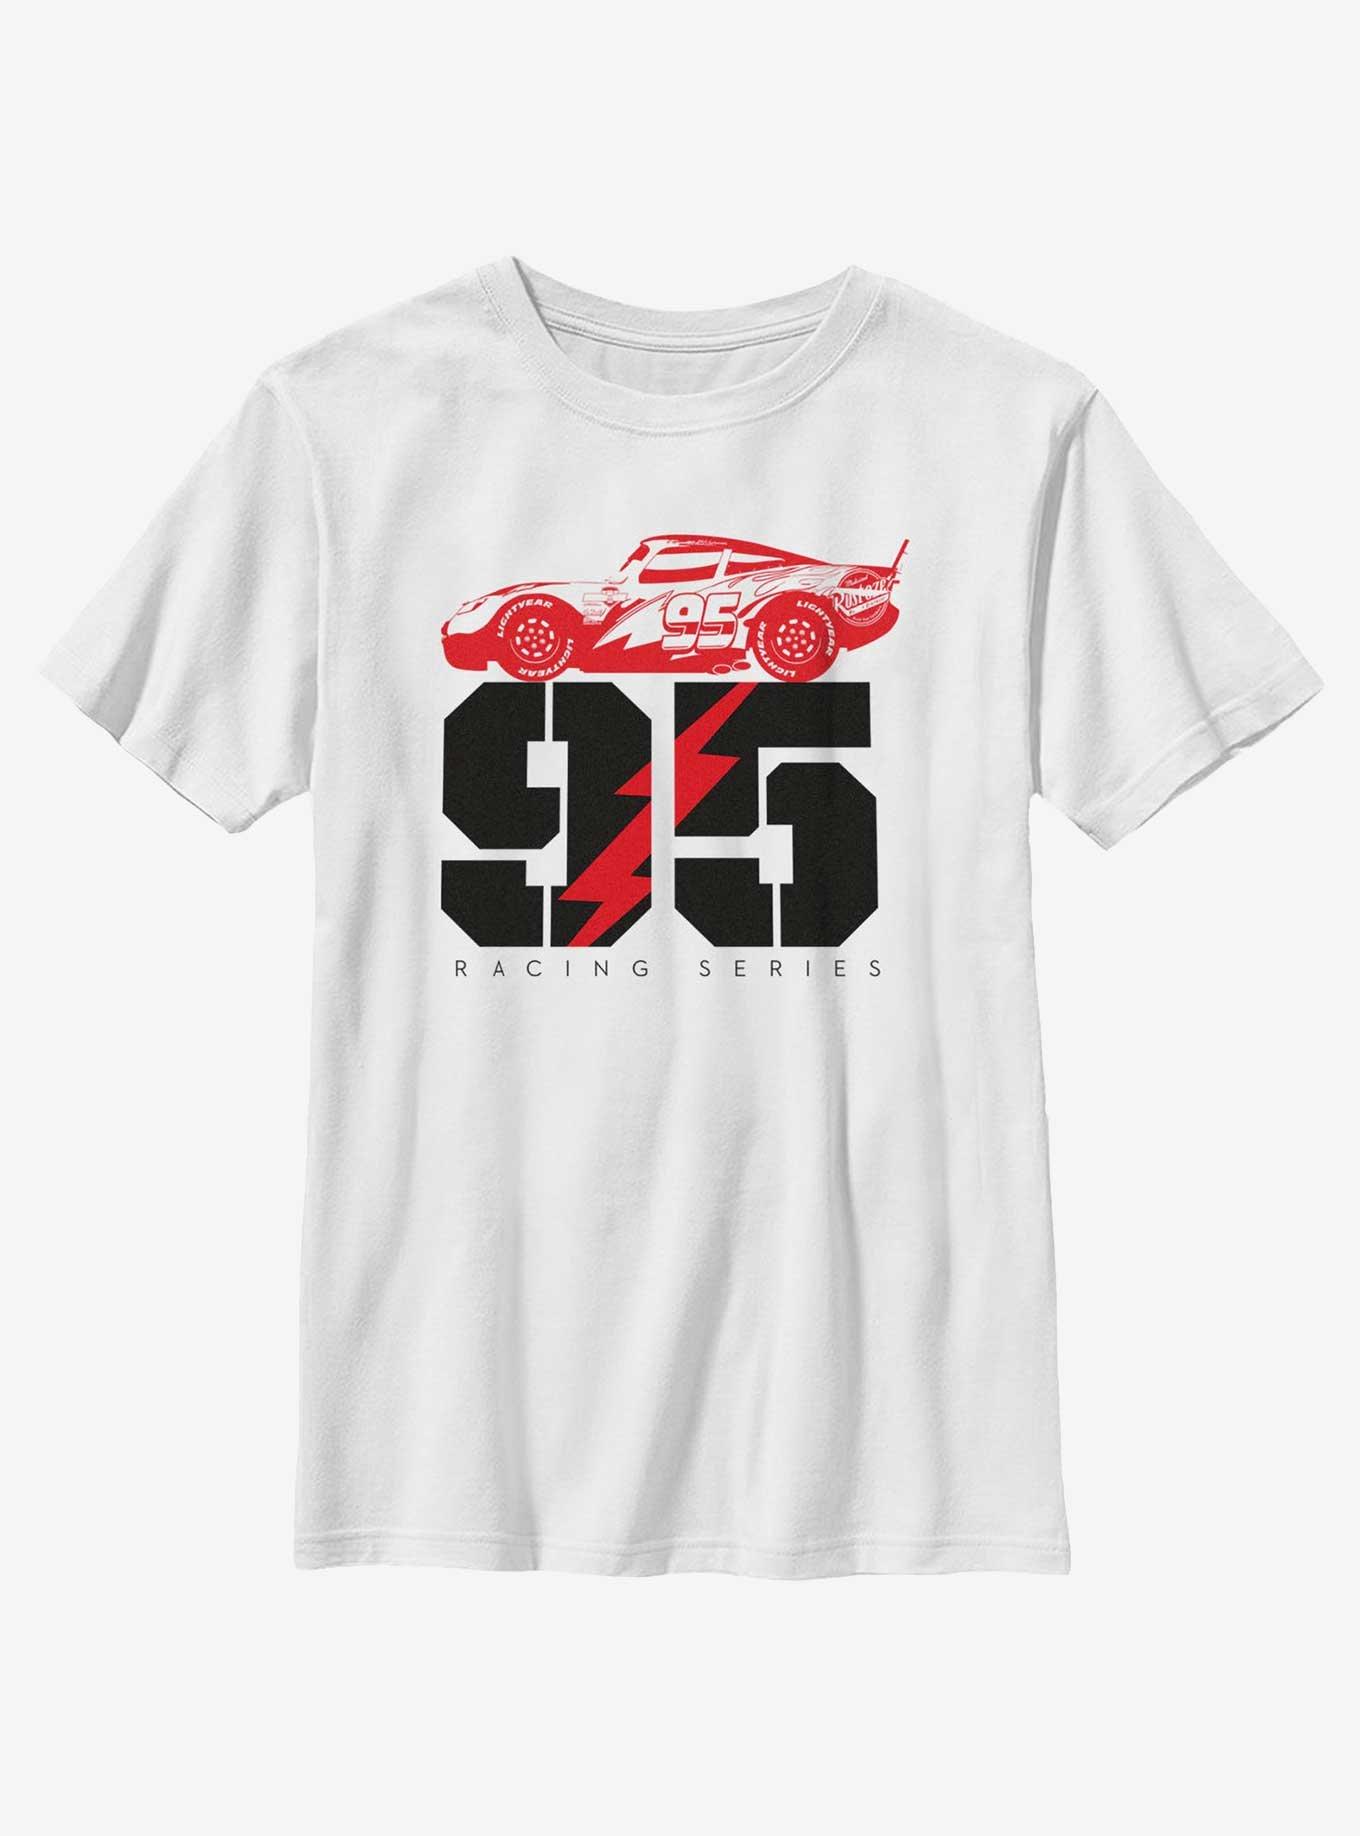 Disney Pixar Cars 95 Racing Series Youth T-Shirt, WHITE, hi-res